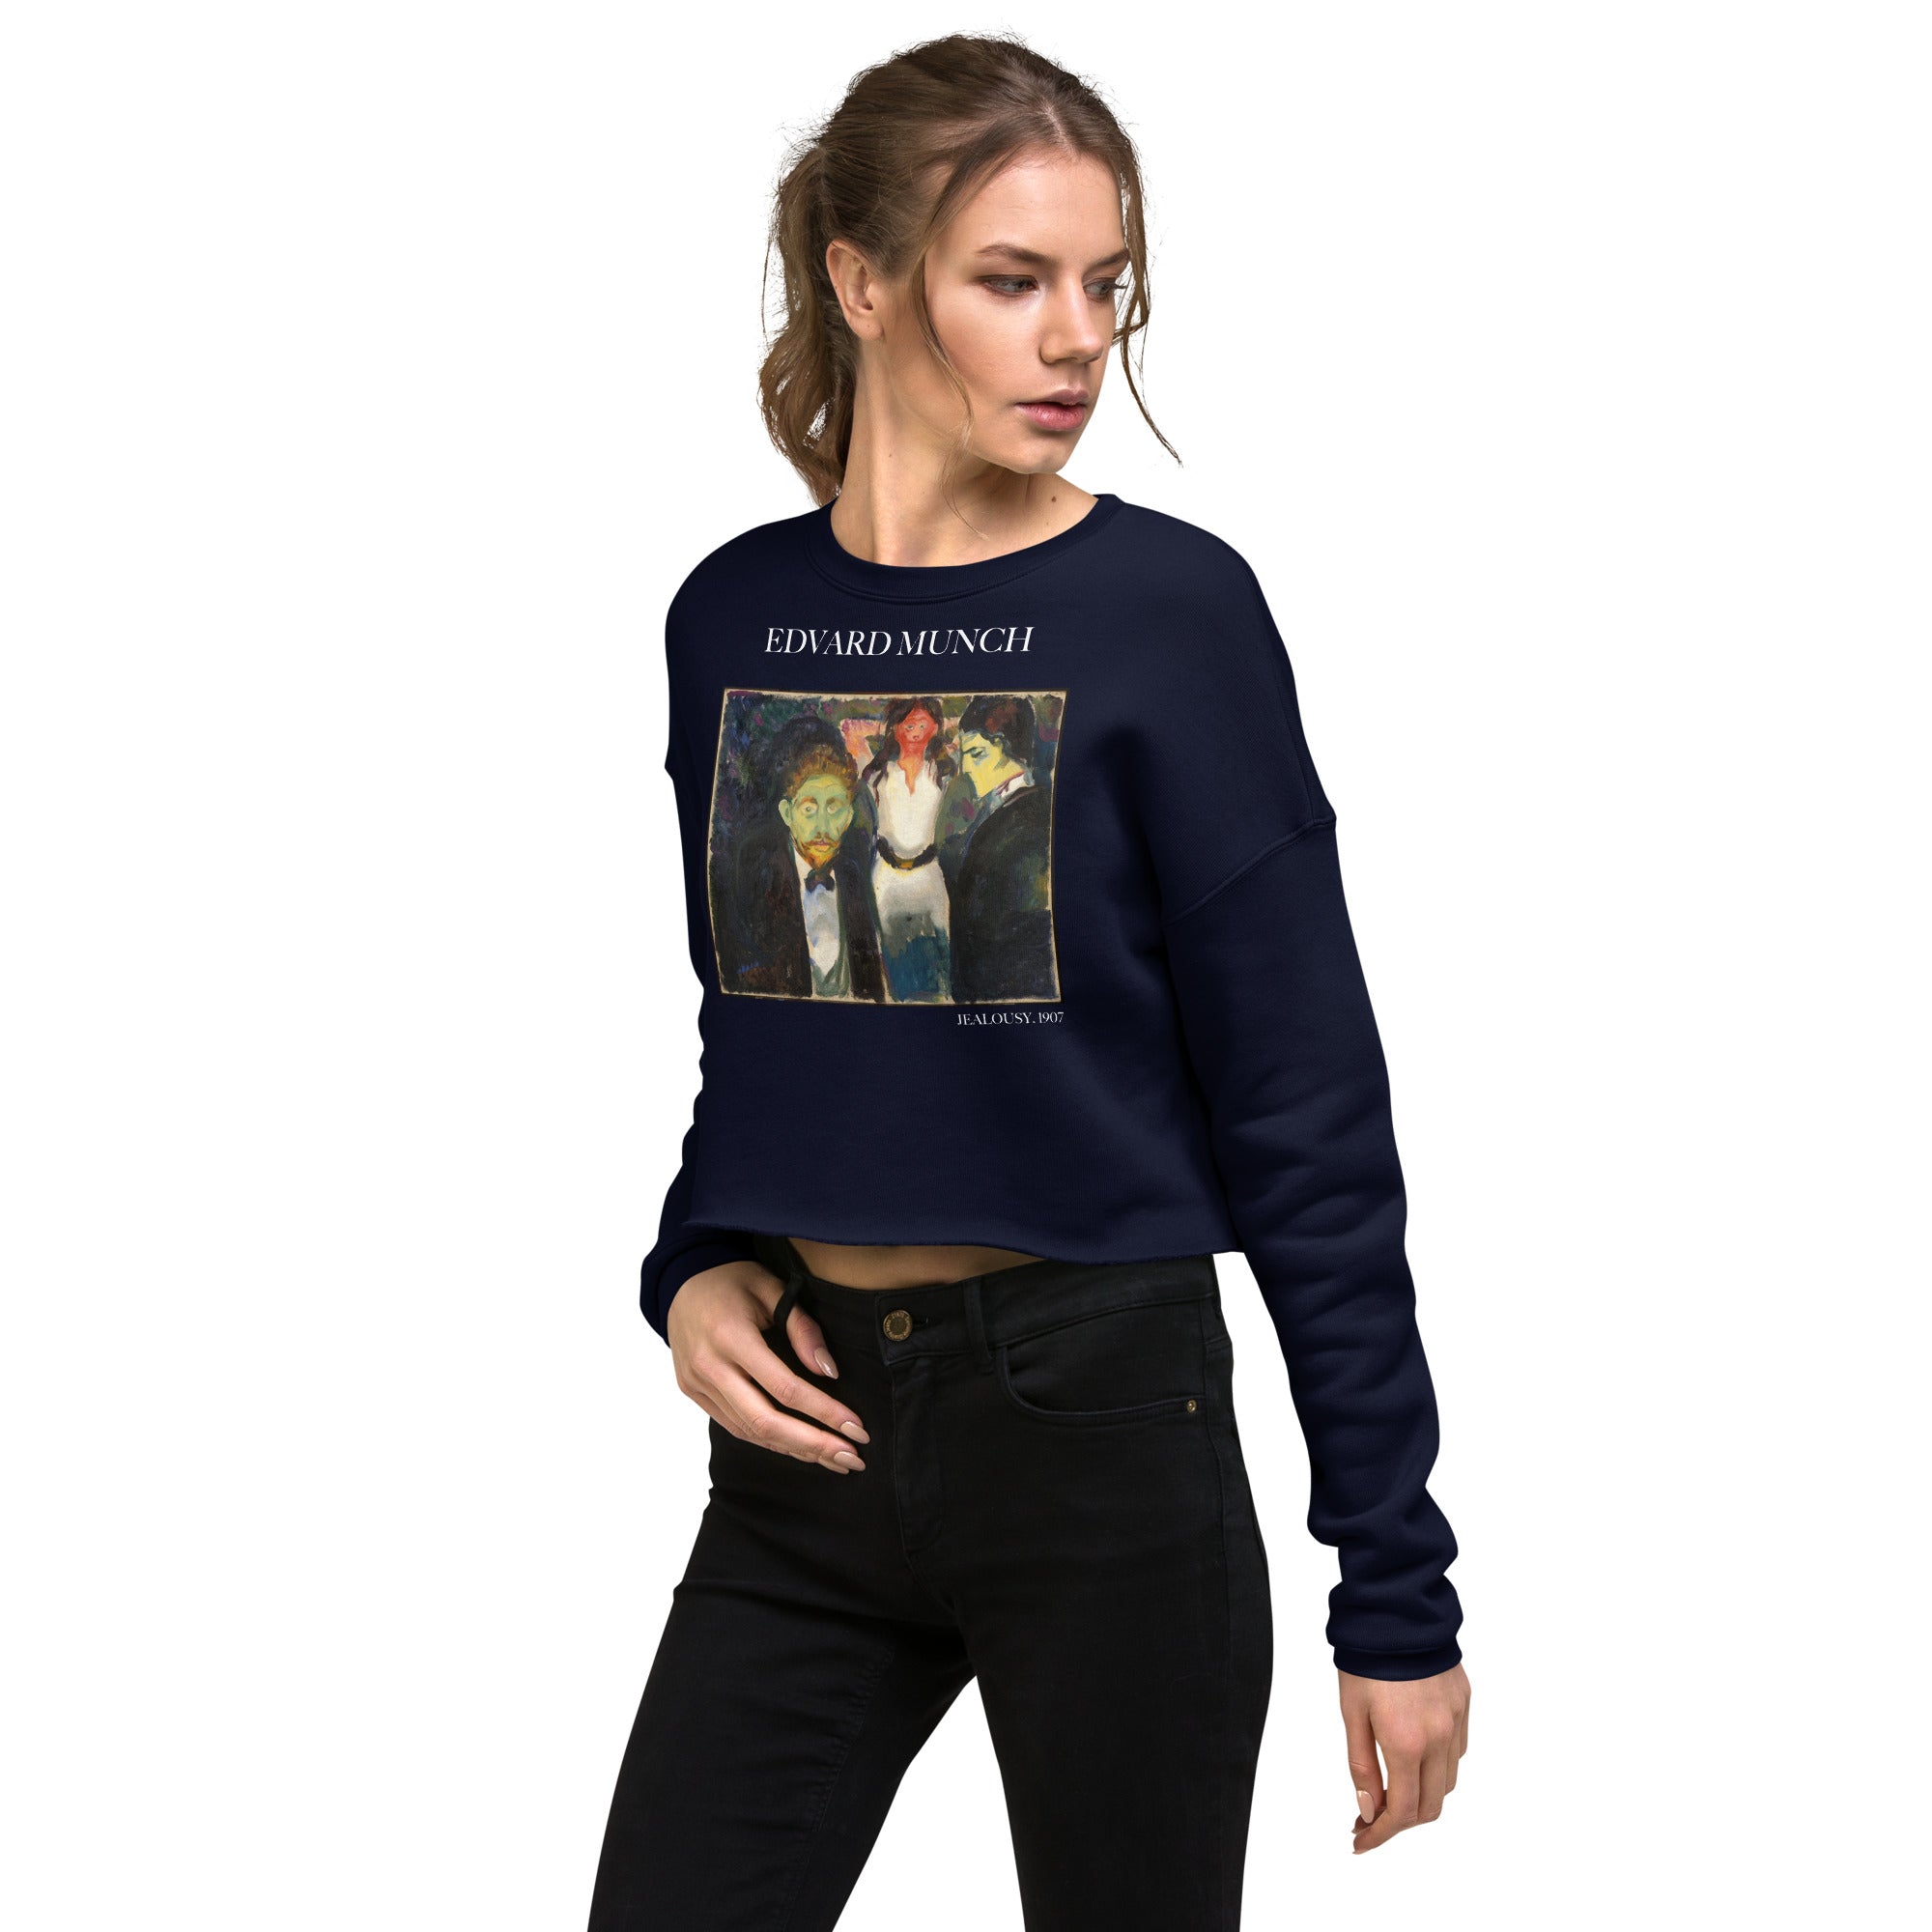 Edvard Munch 'Jealousy' Famous Painting Cropped Sweatshirt | Premium Art Cropped Sweatshirt